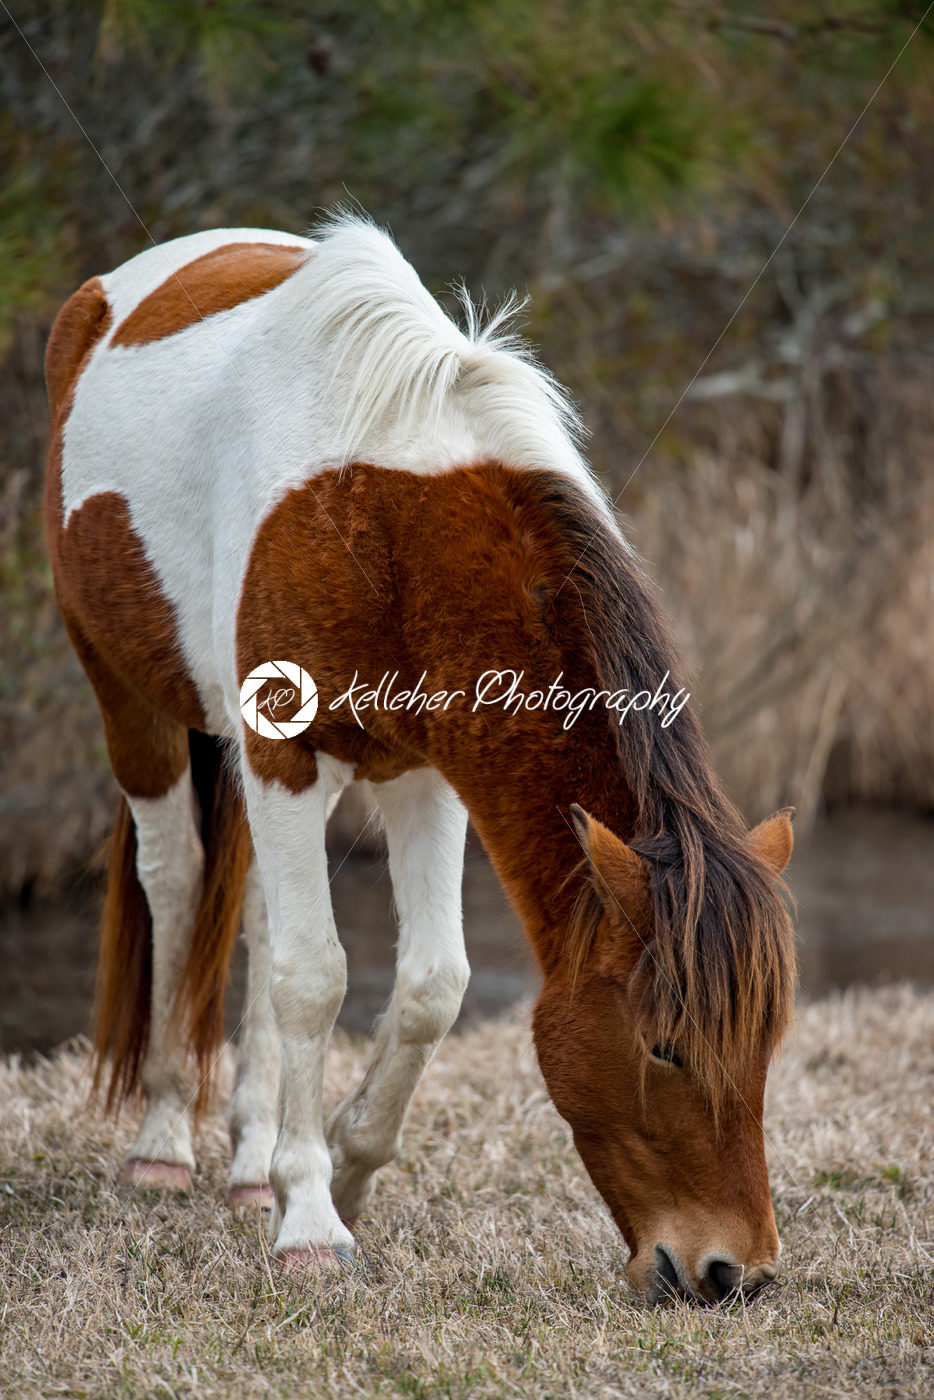 An Assateague wild horse in Maryland - Kelleher Photography Store